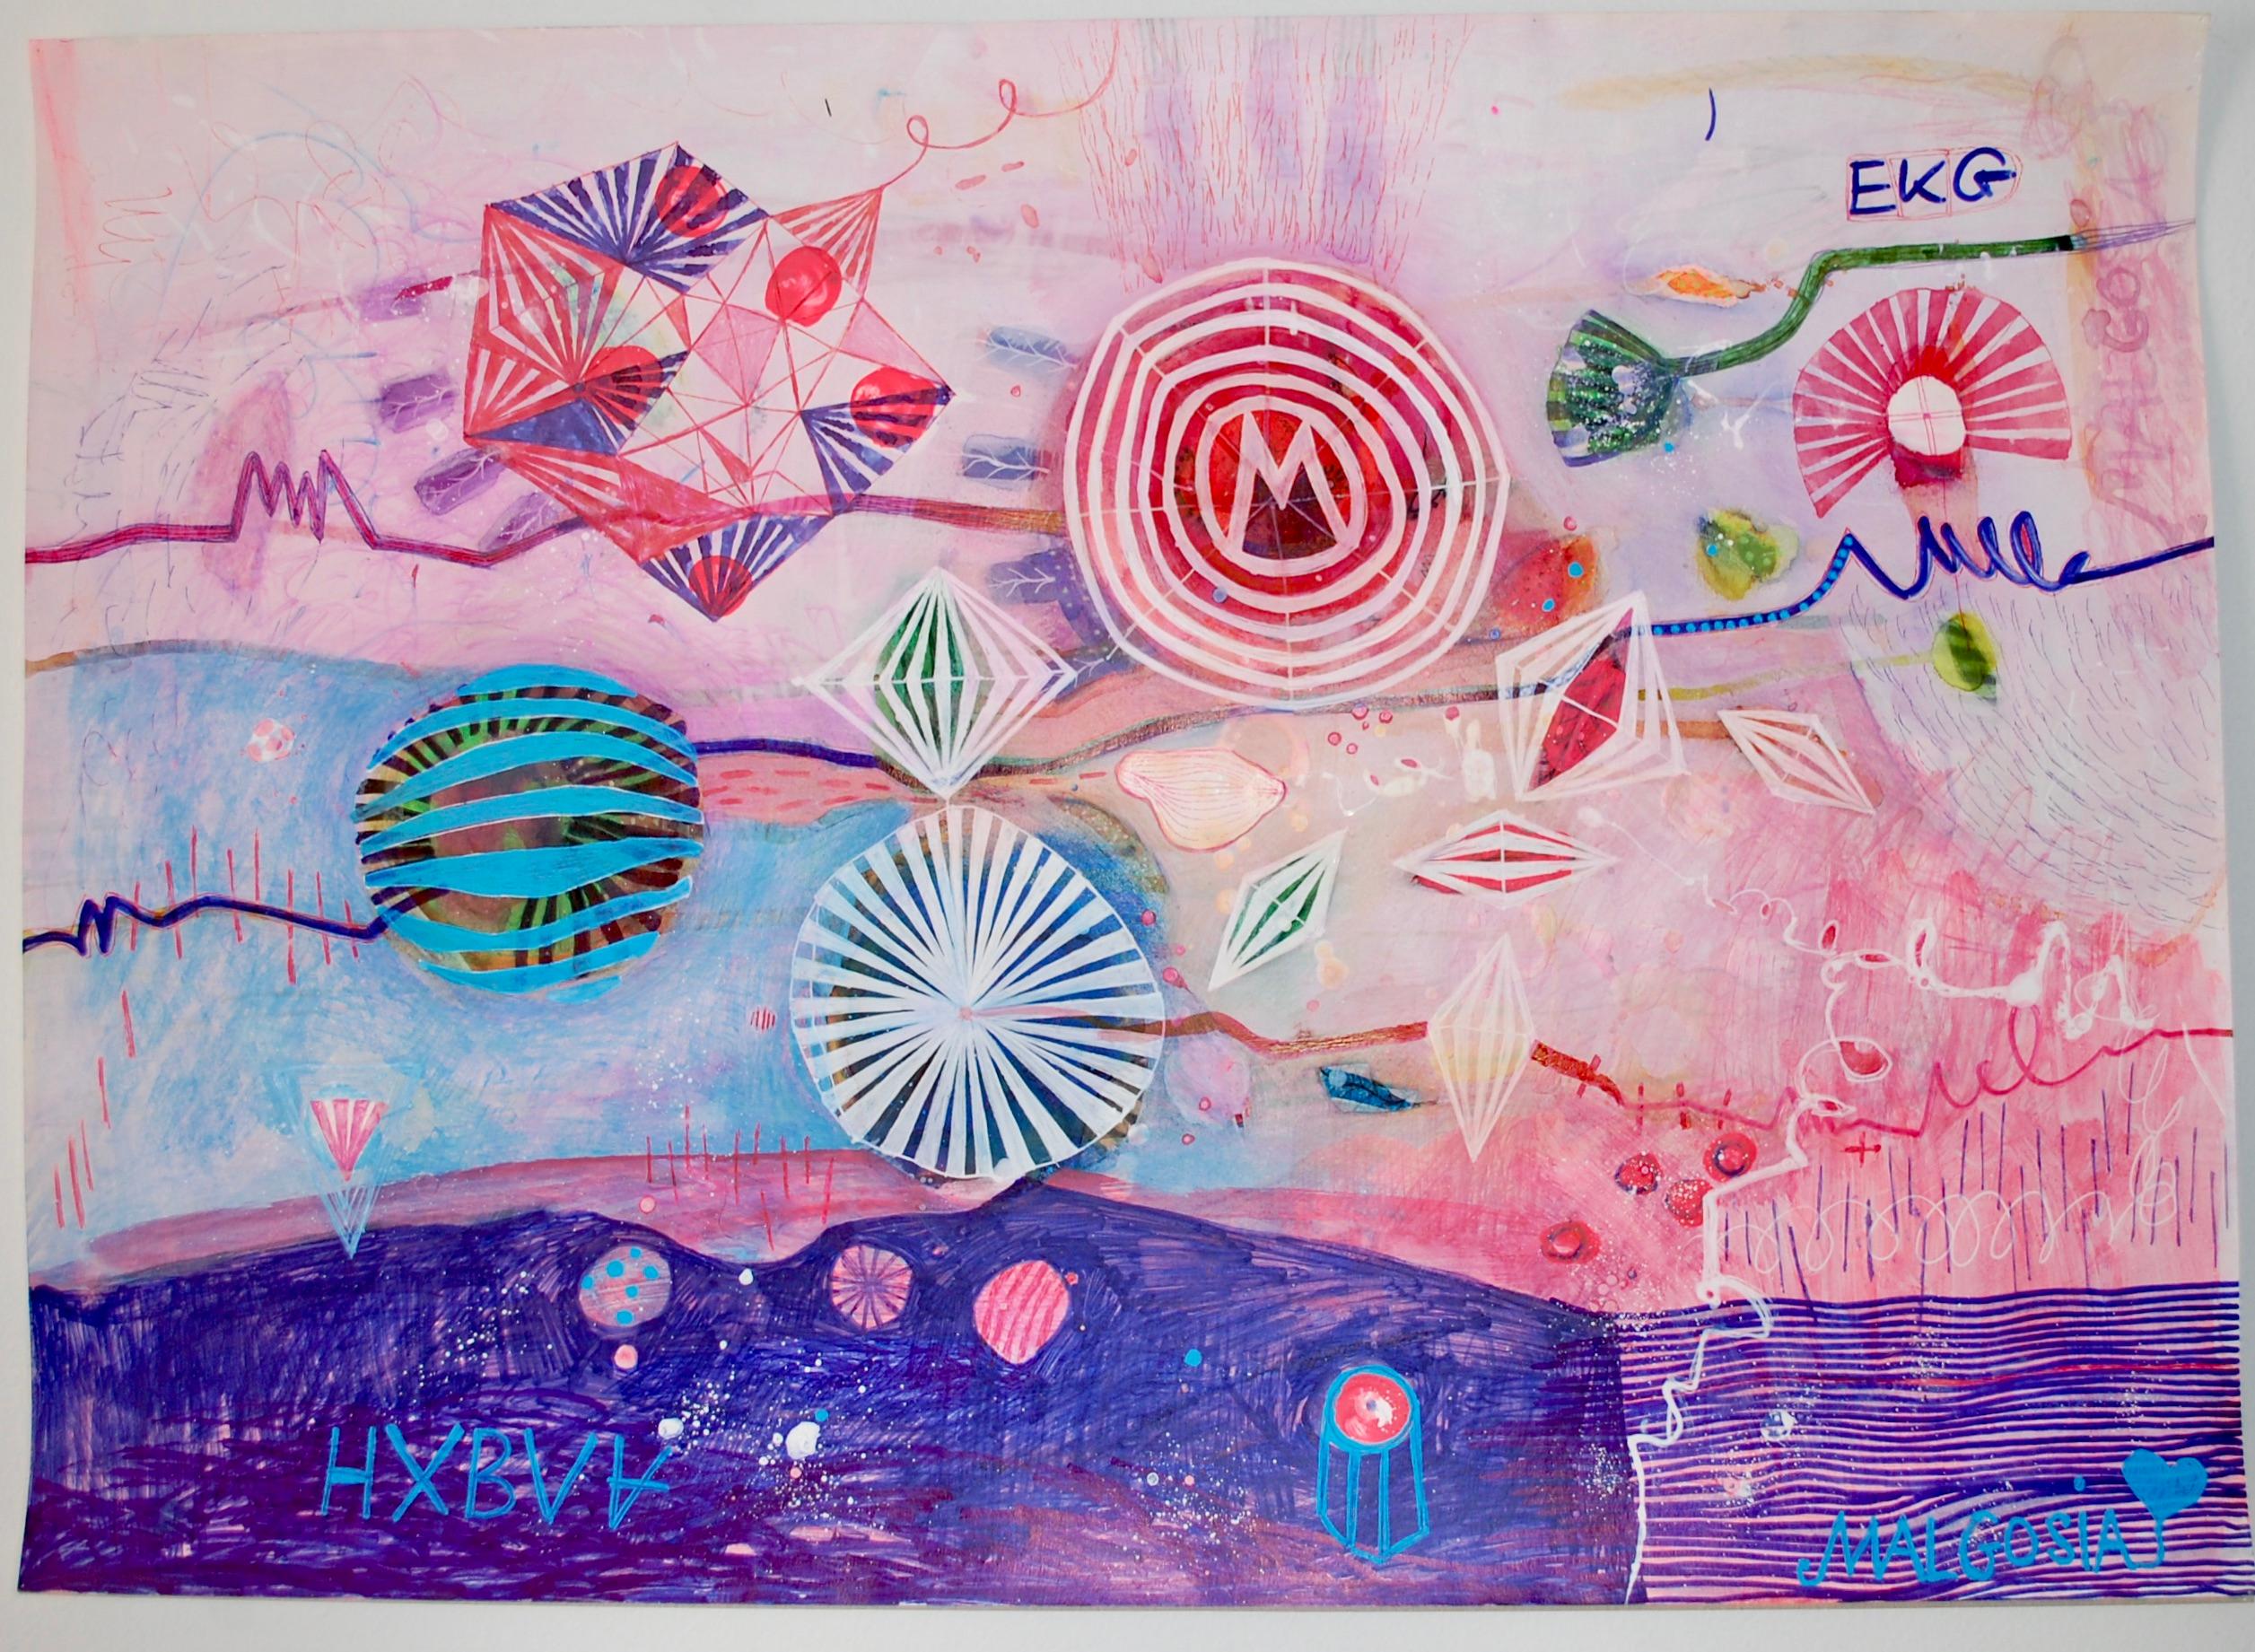 Malgosia Kiernozycka Abstract Painting - EKG Work on Paper